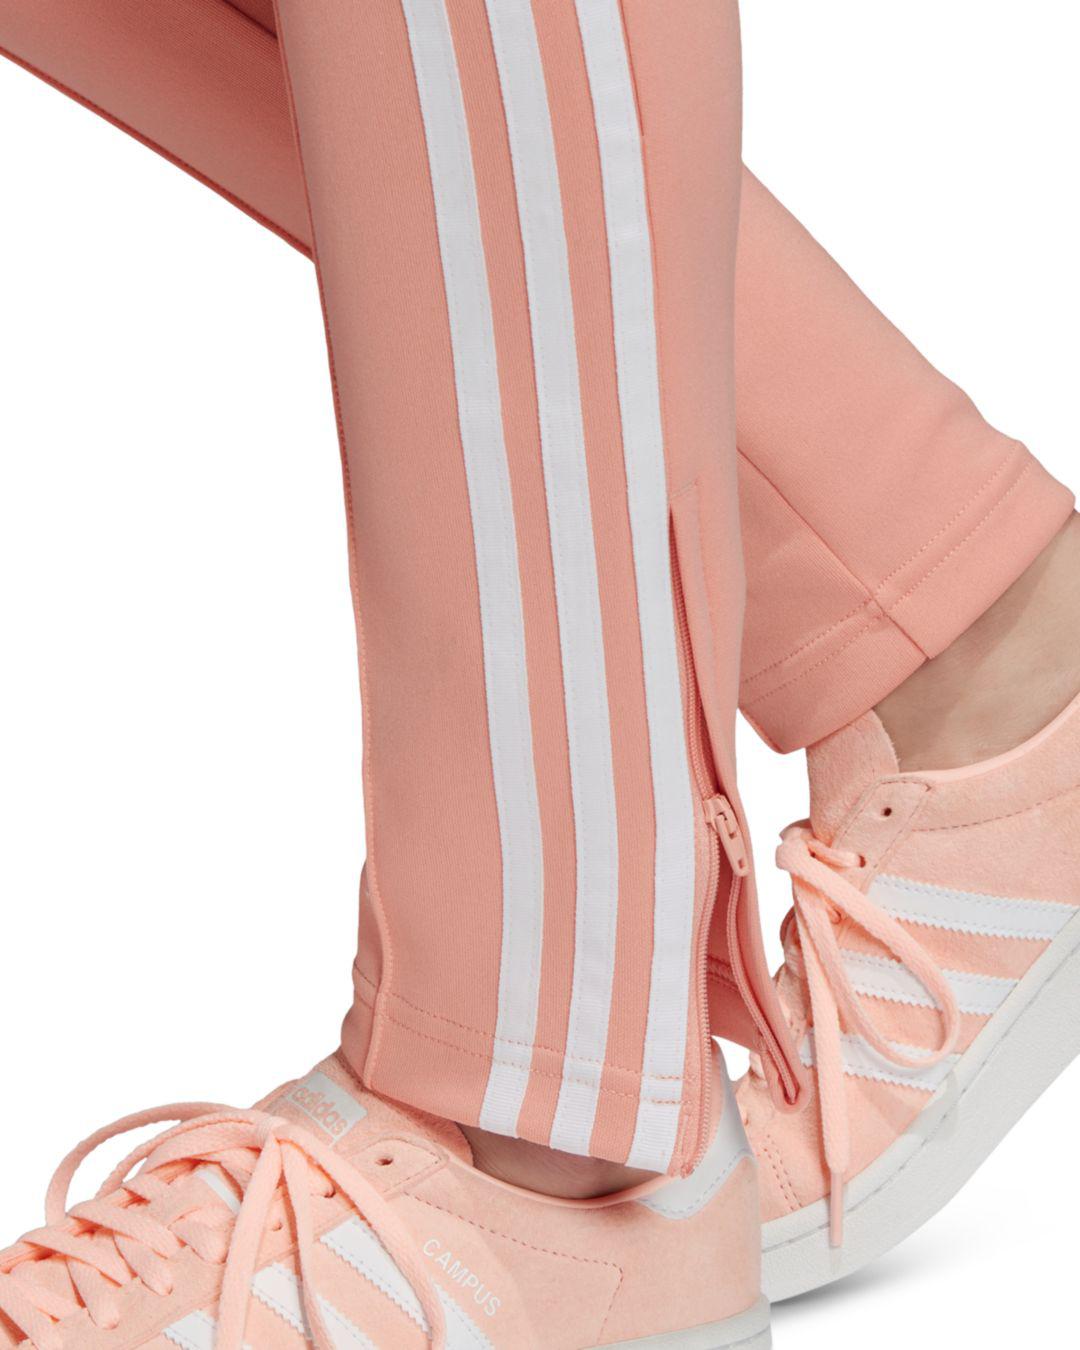 adidas dust pink pants